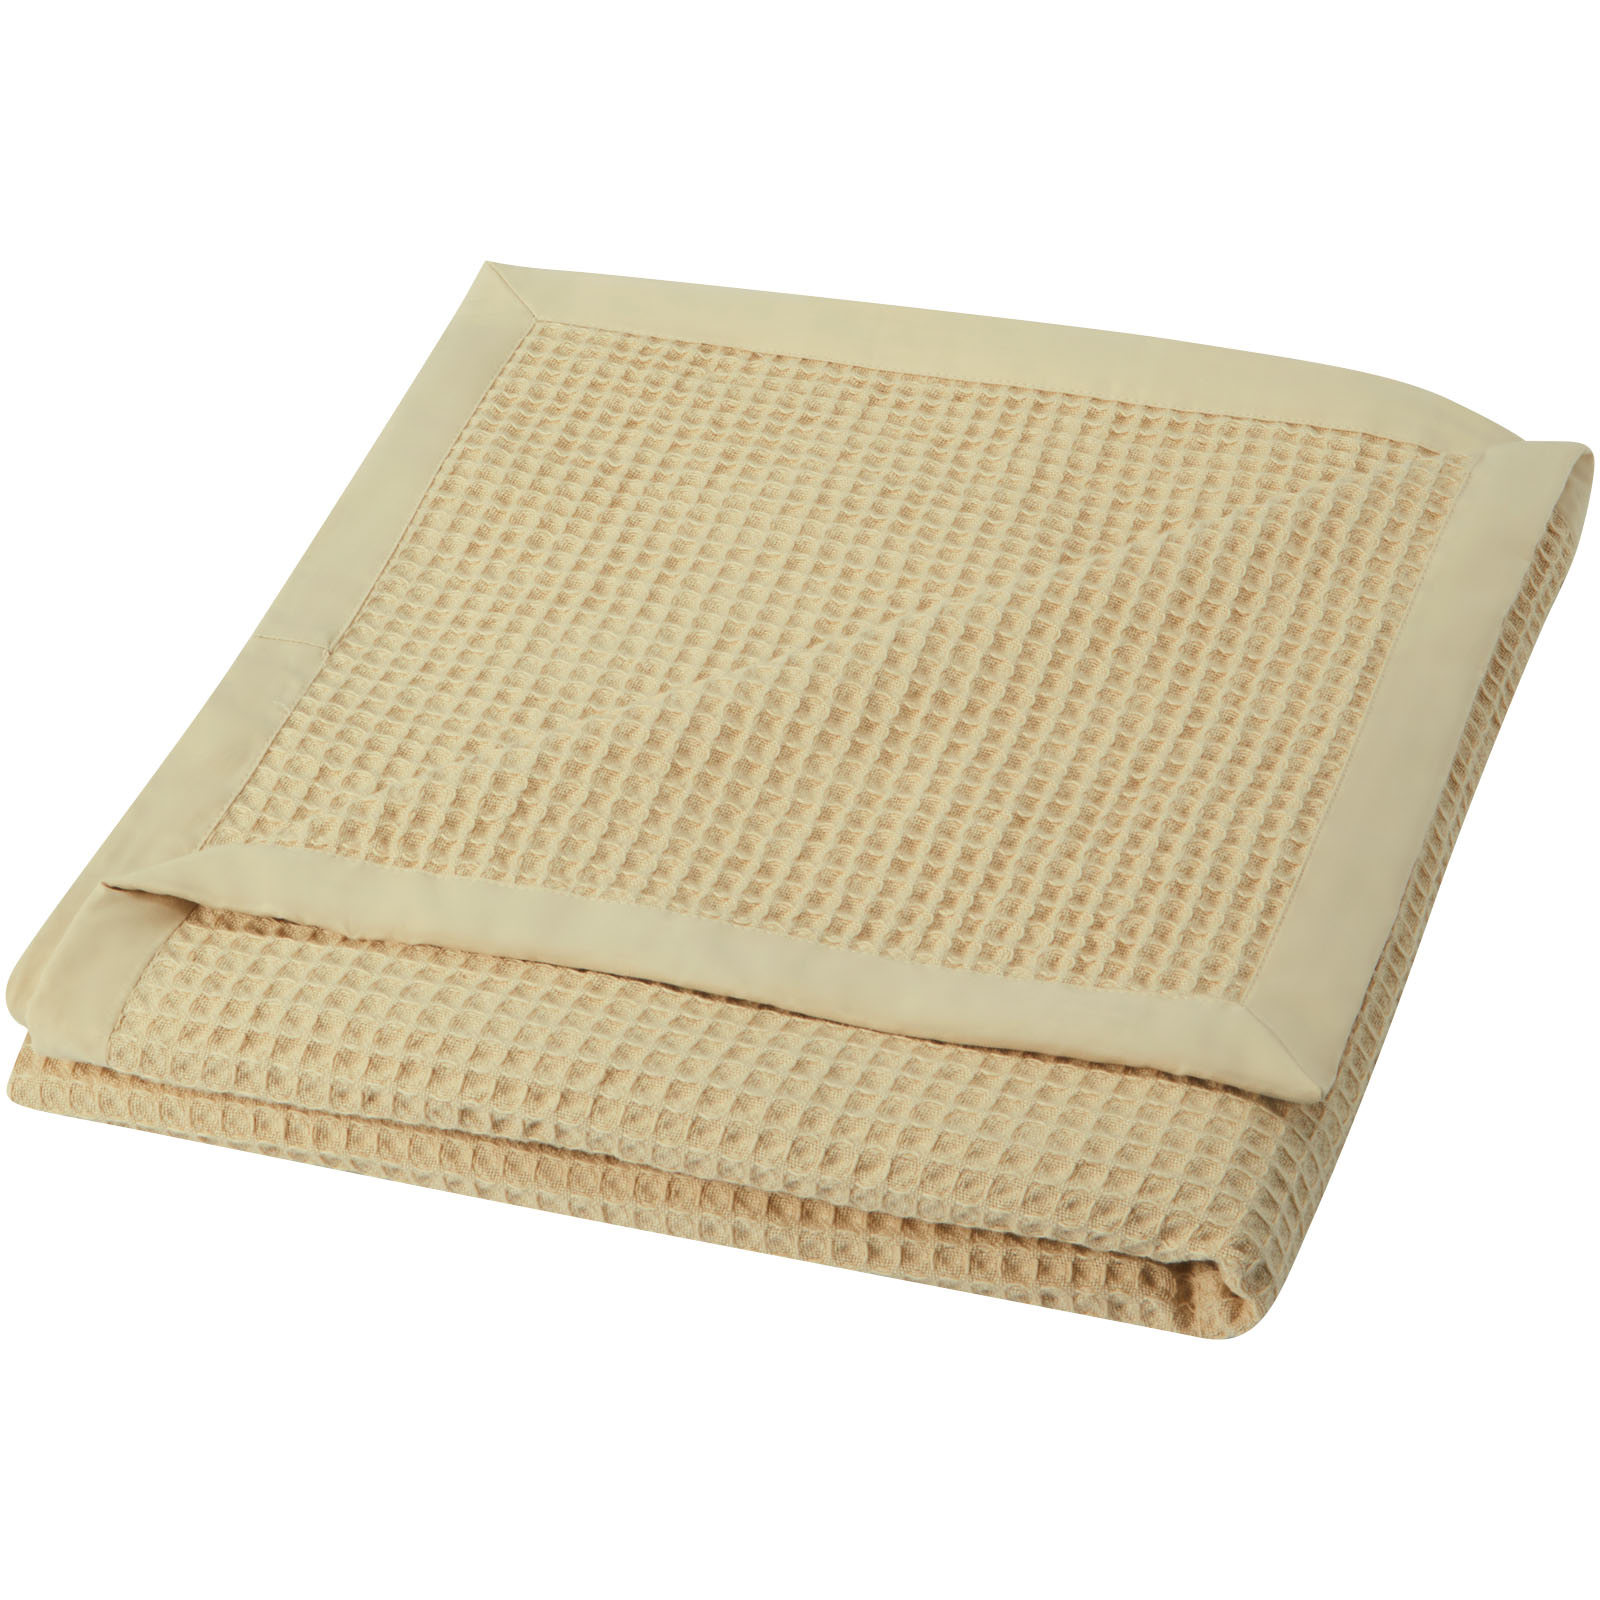 Blankets - Abele 150 x 140 cm cotton waffle blanket